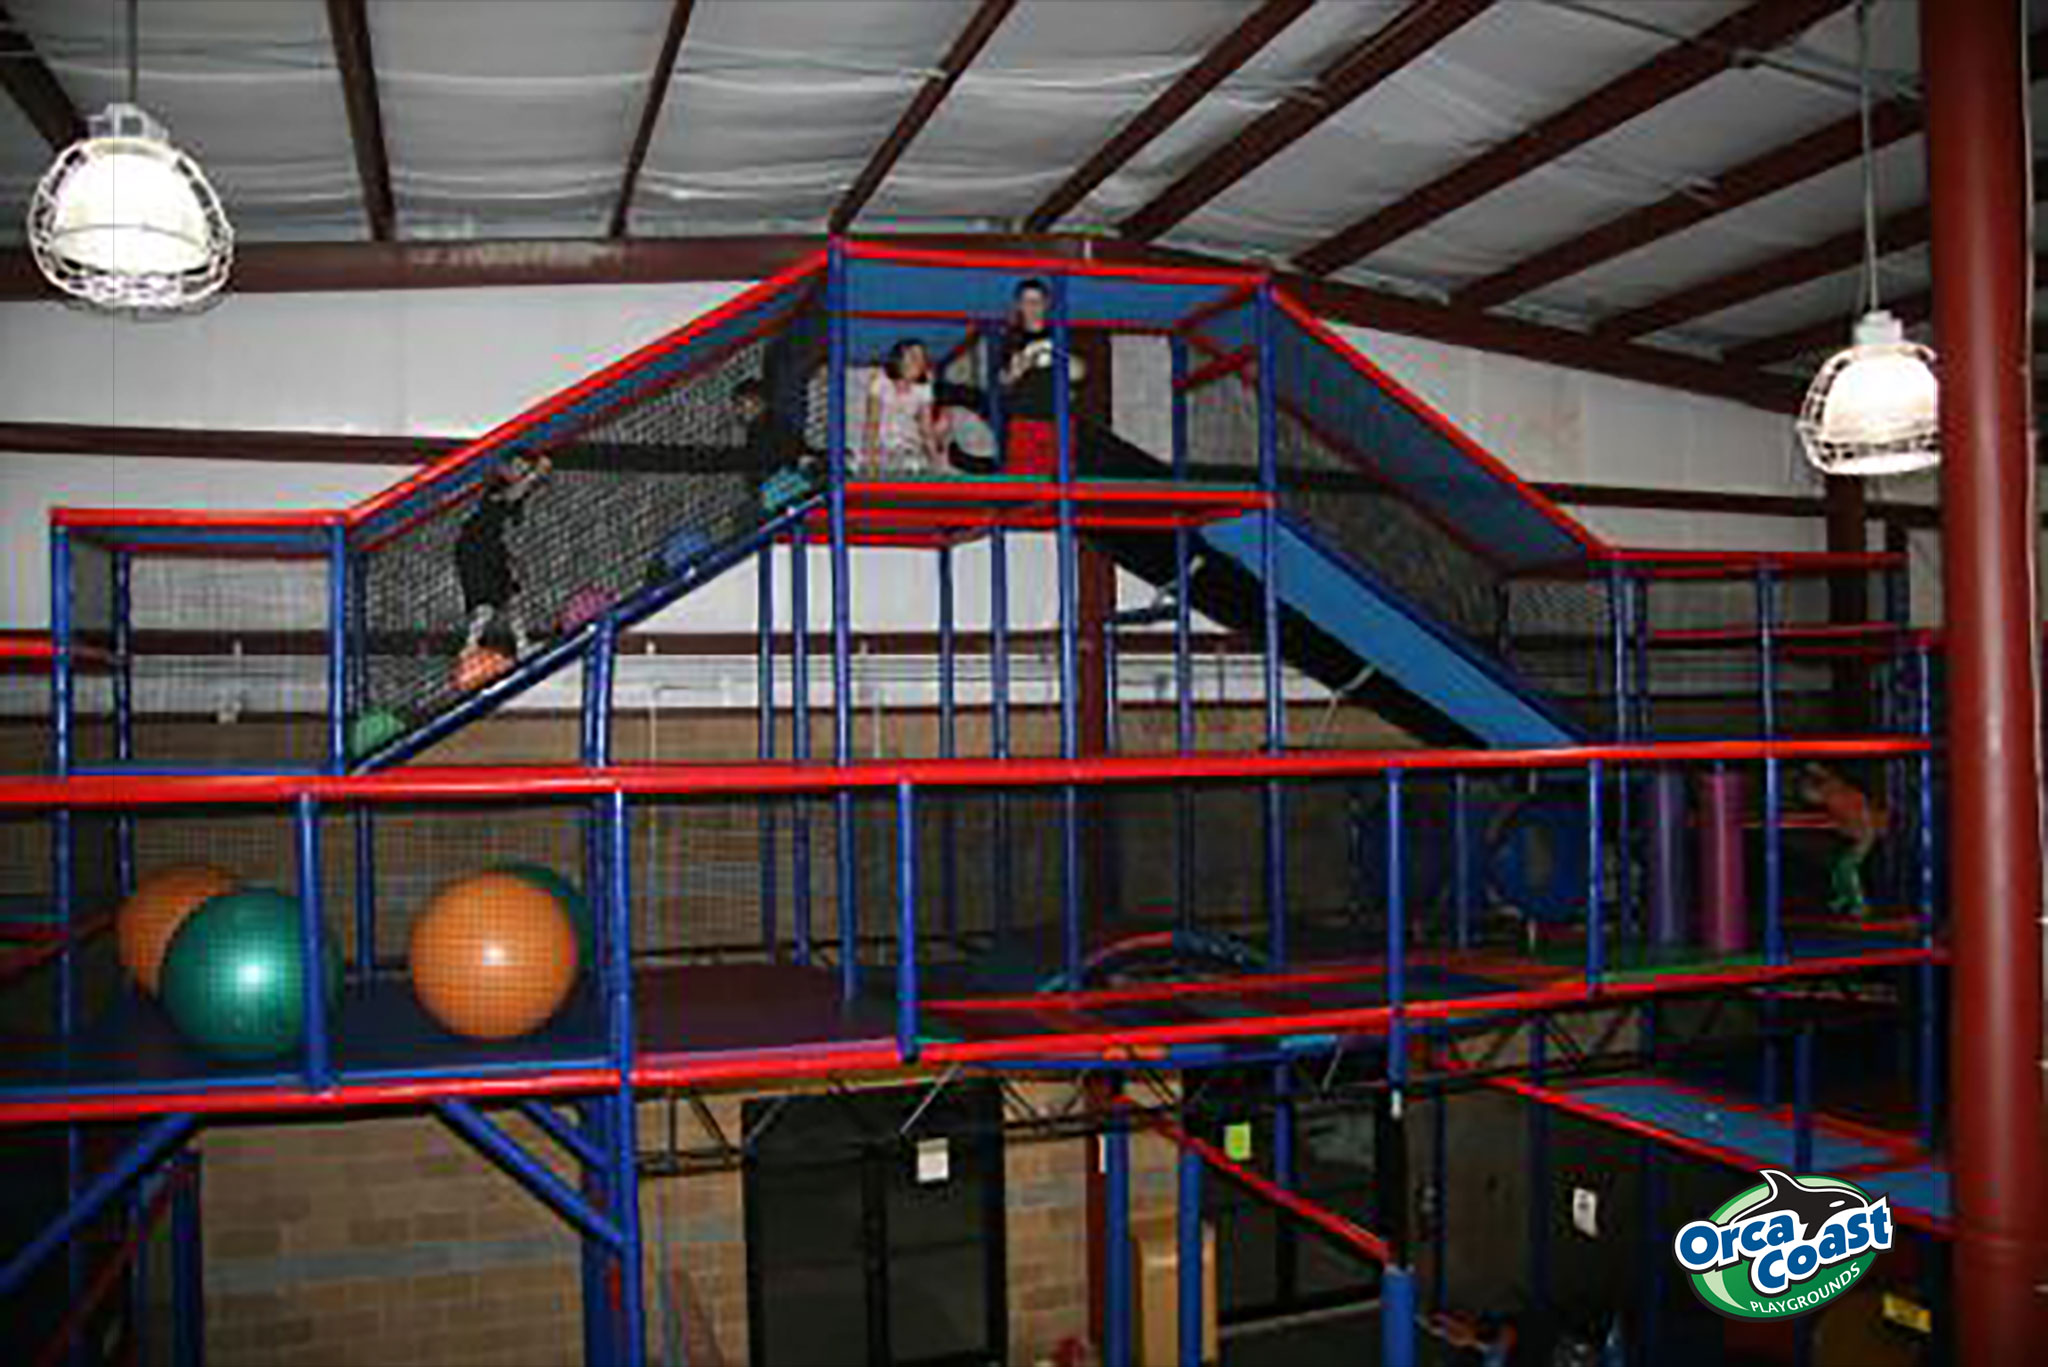 Hotshots Indoor Sports Arena: Ultimate Play Destination in Mt. Pleasant, PA